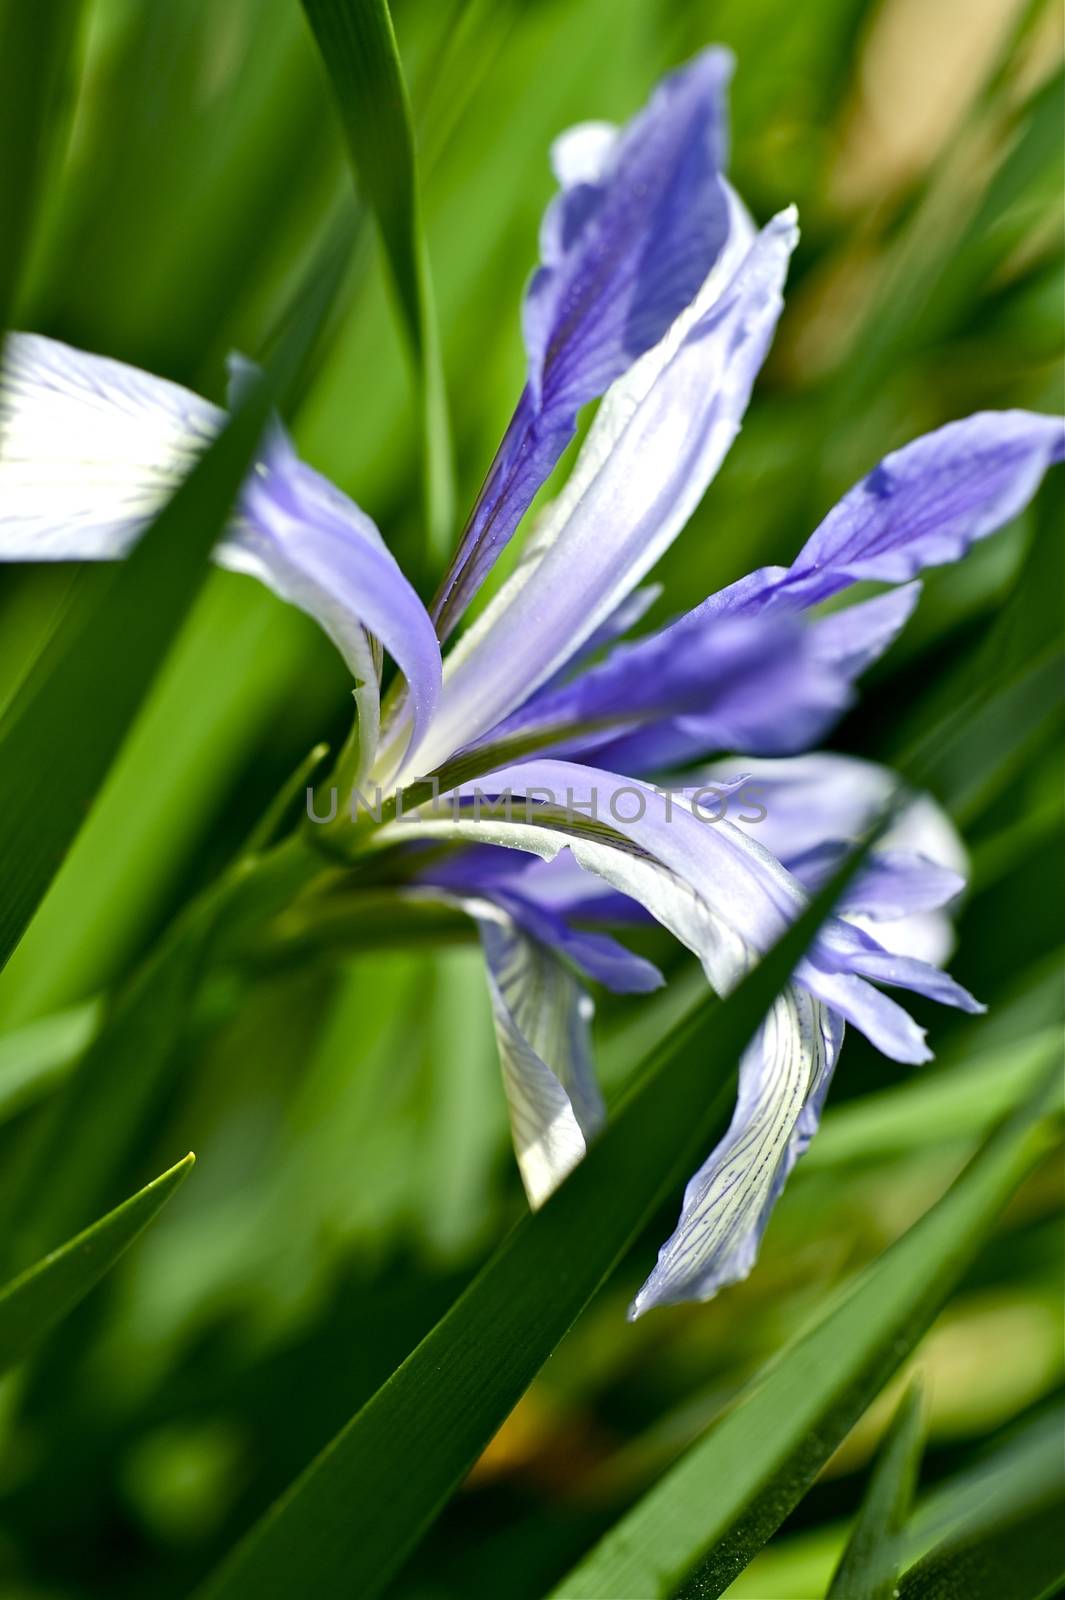 Iris Plant by welcomia